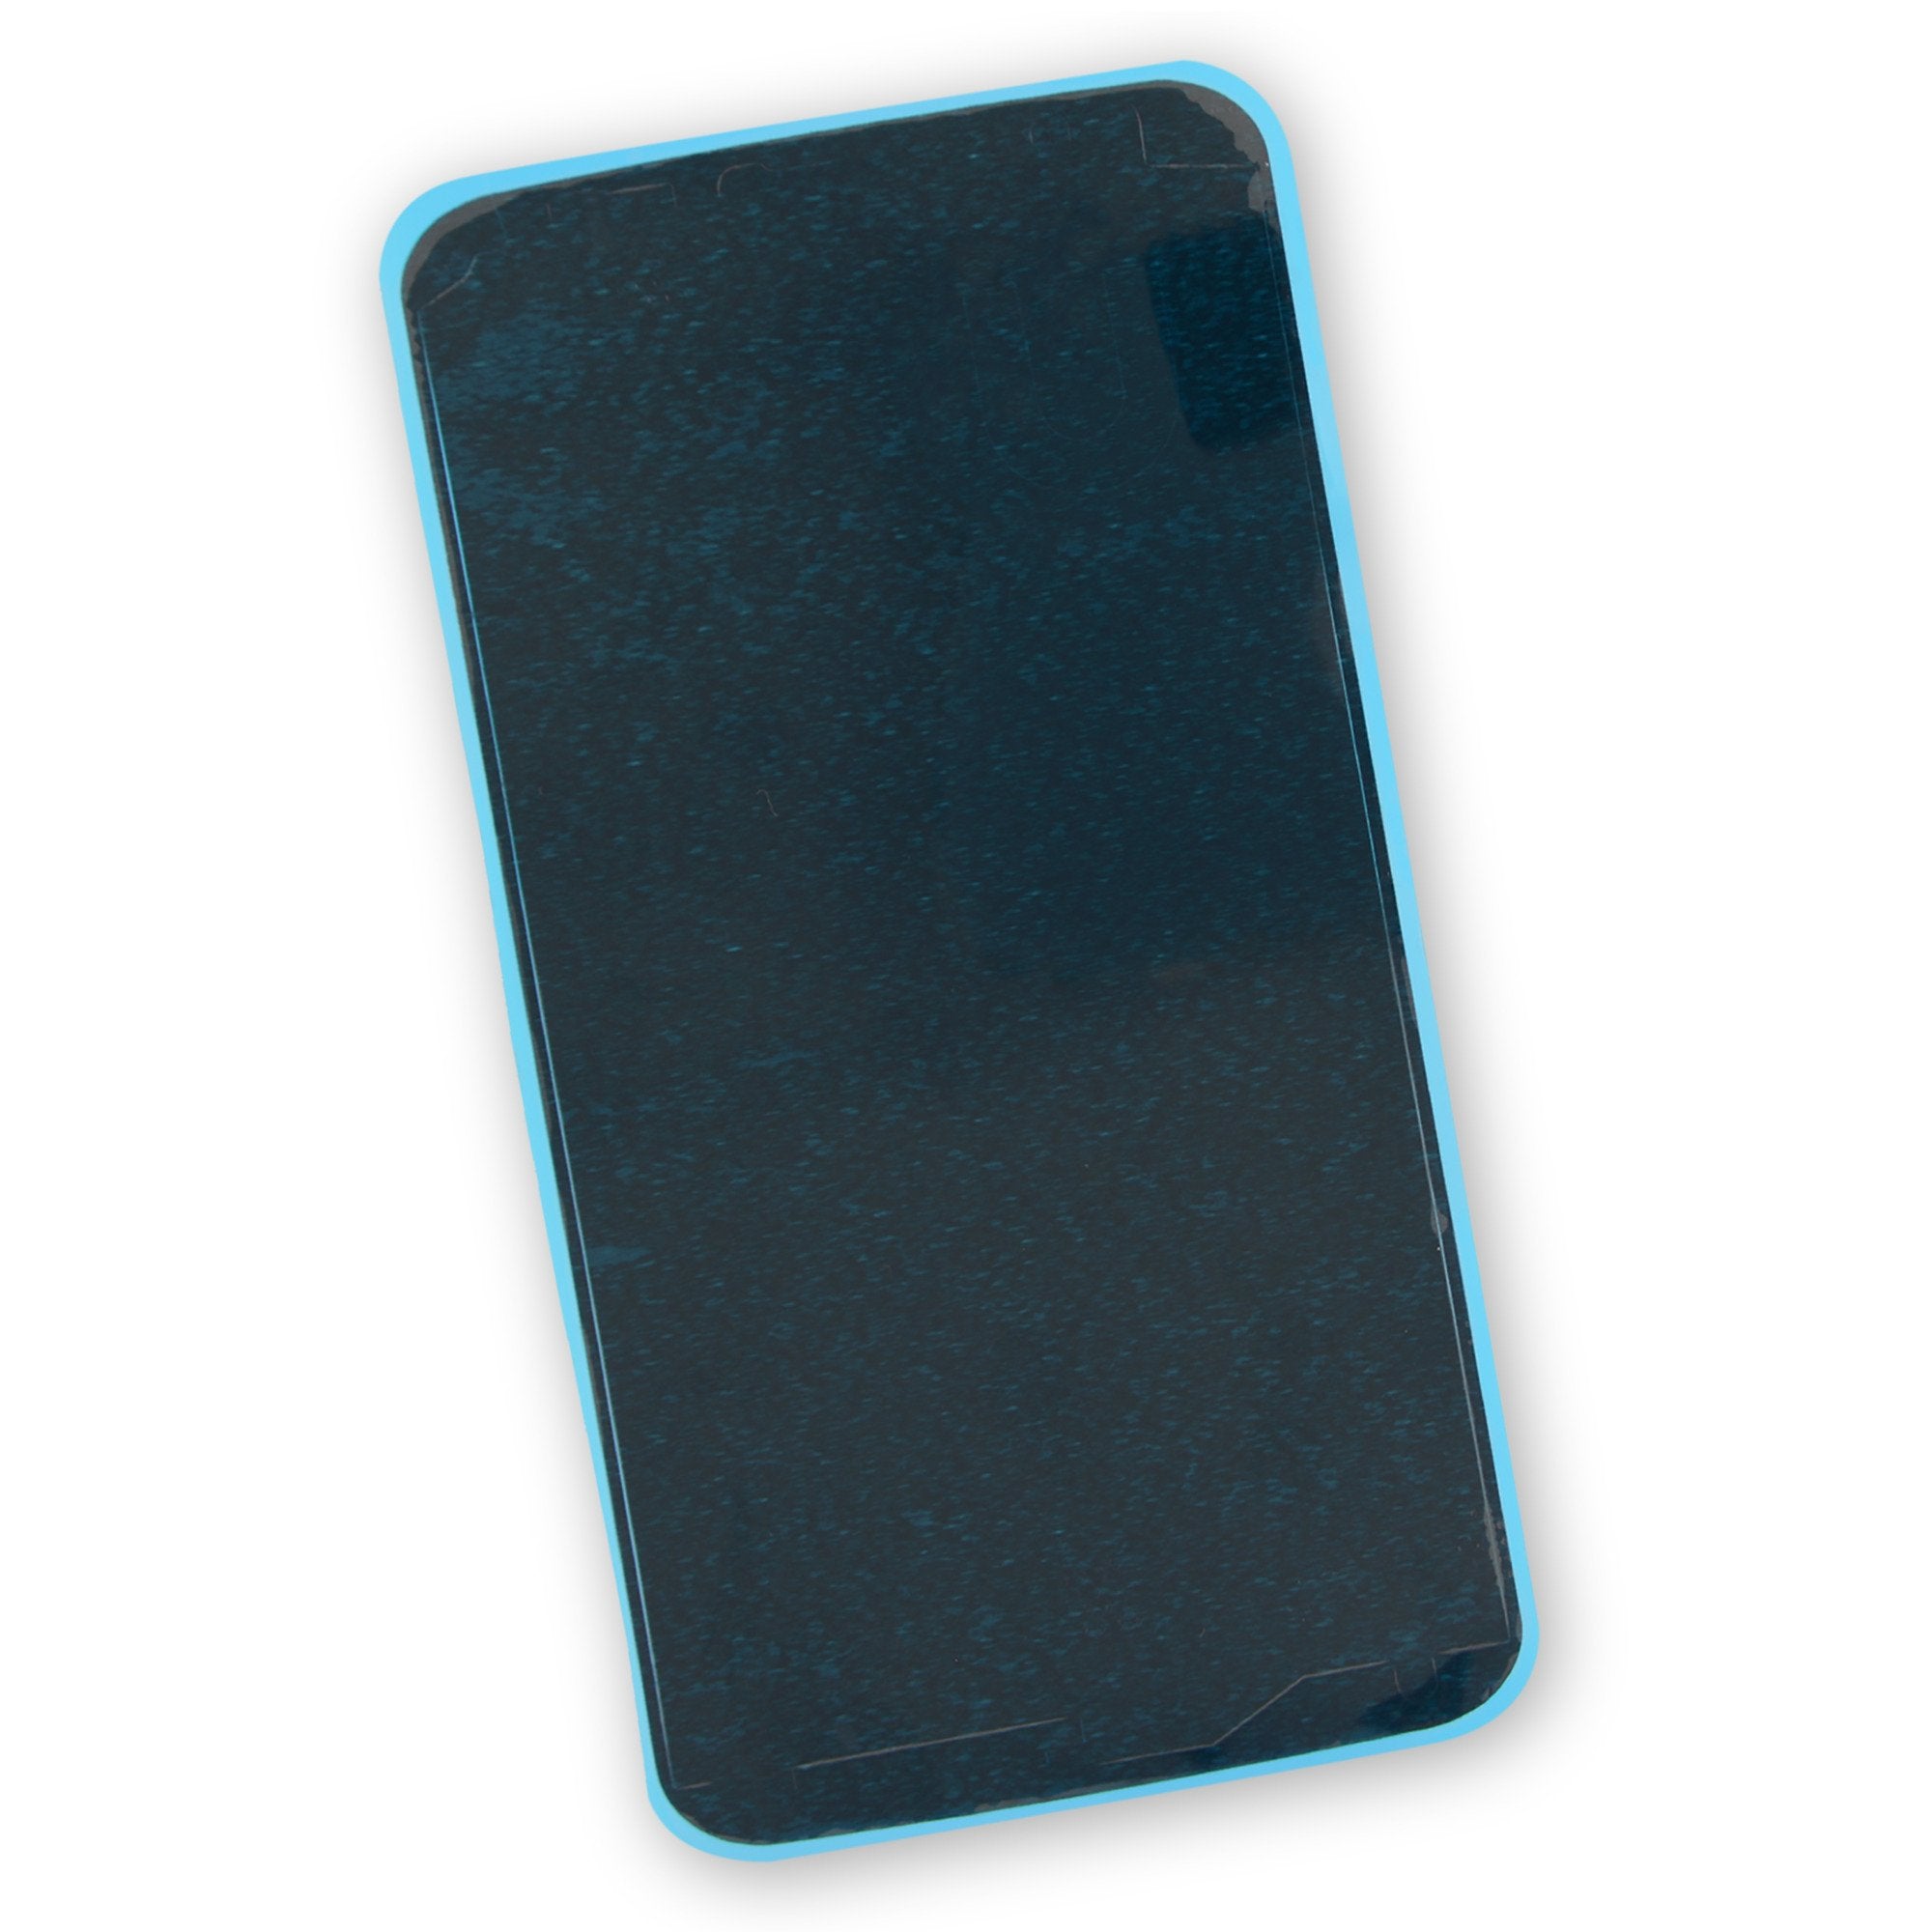 Nexus 6 Display Adhesive